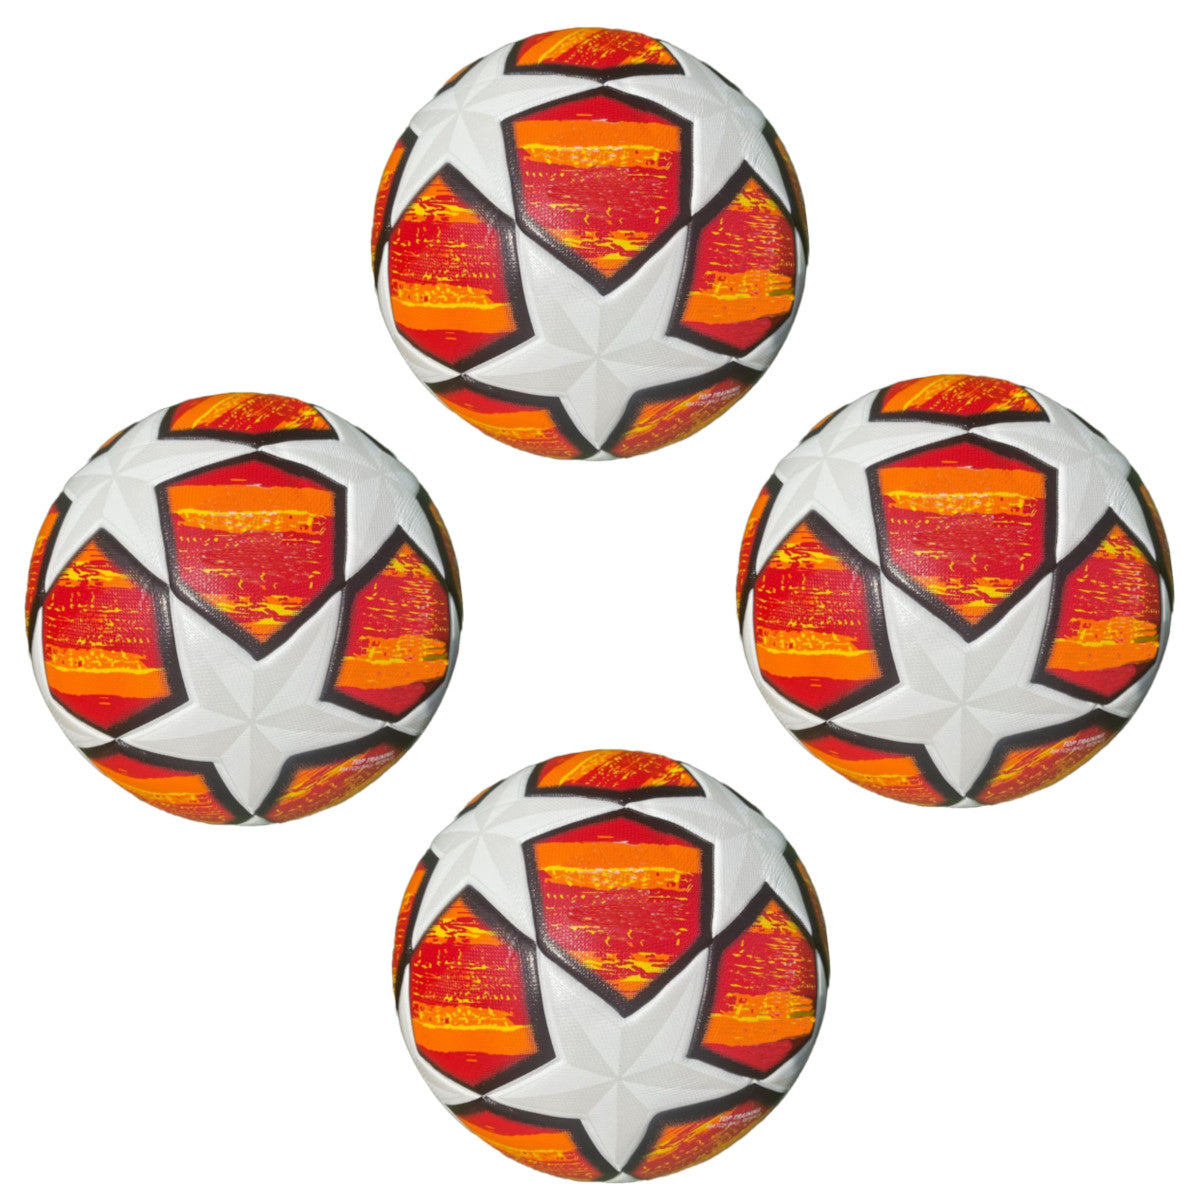 Pack of 10 Training or Game Soccer Balls Size 5 Orange White